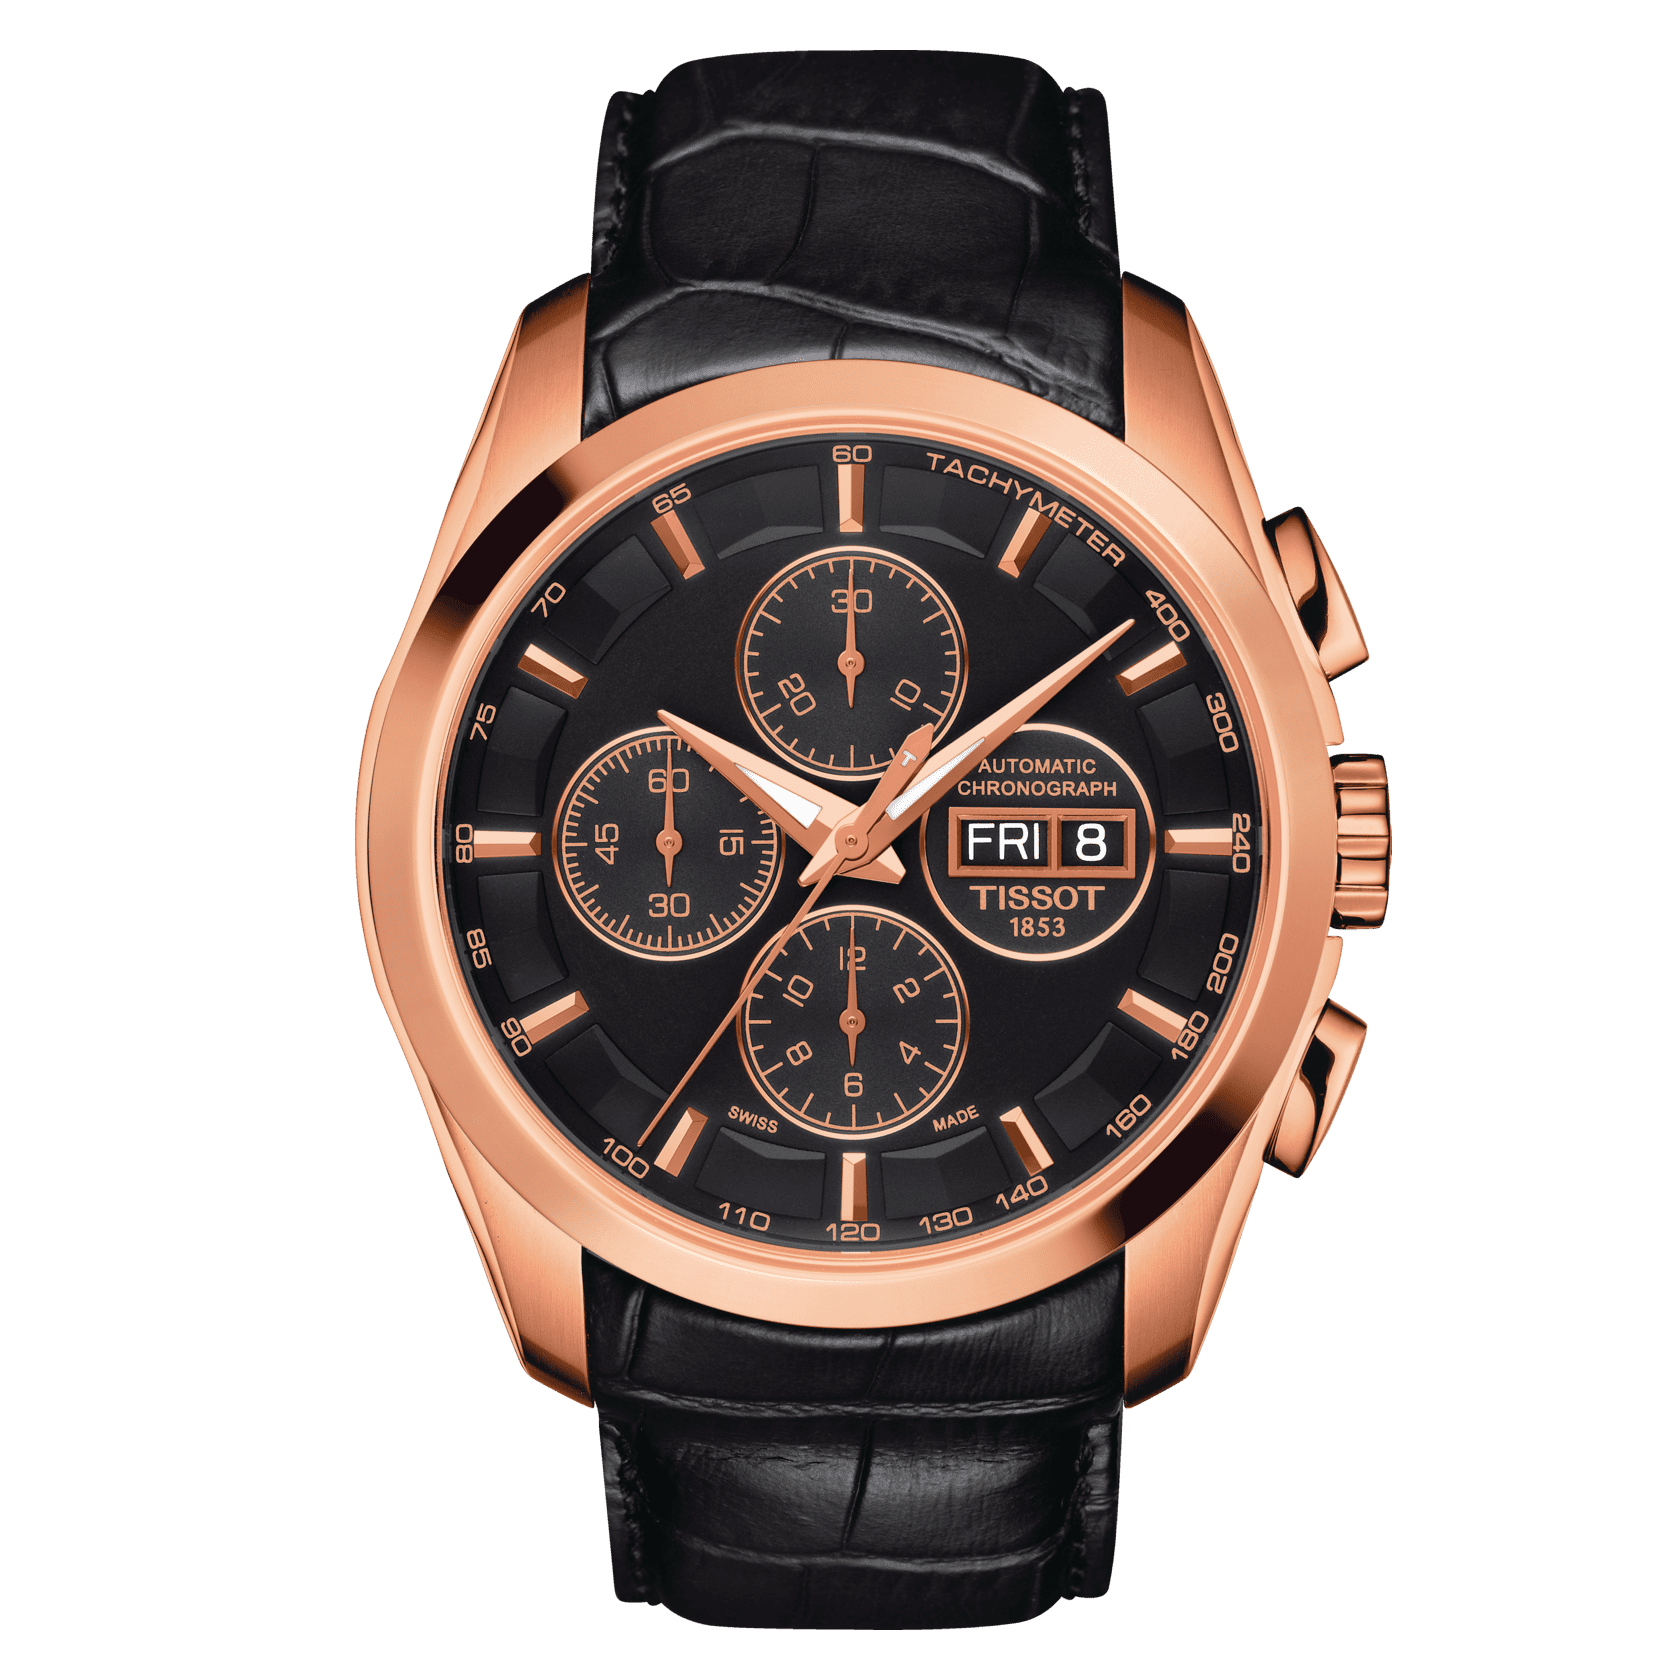 Richard Mille 056 Replica Watch